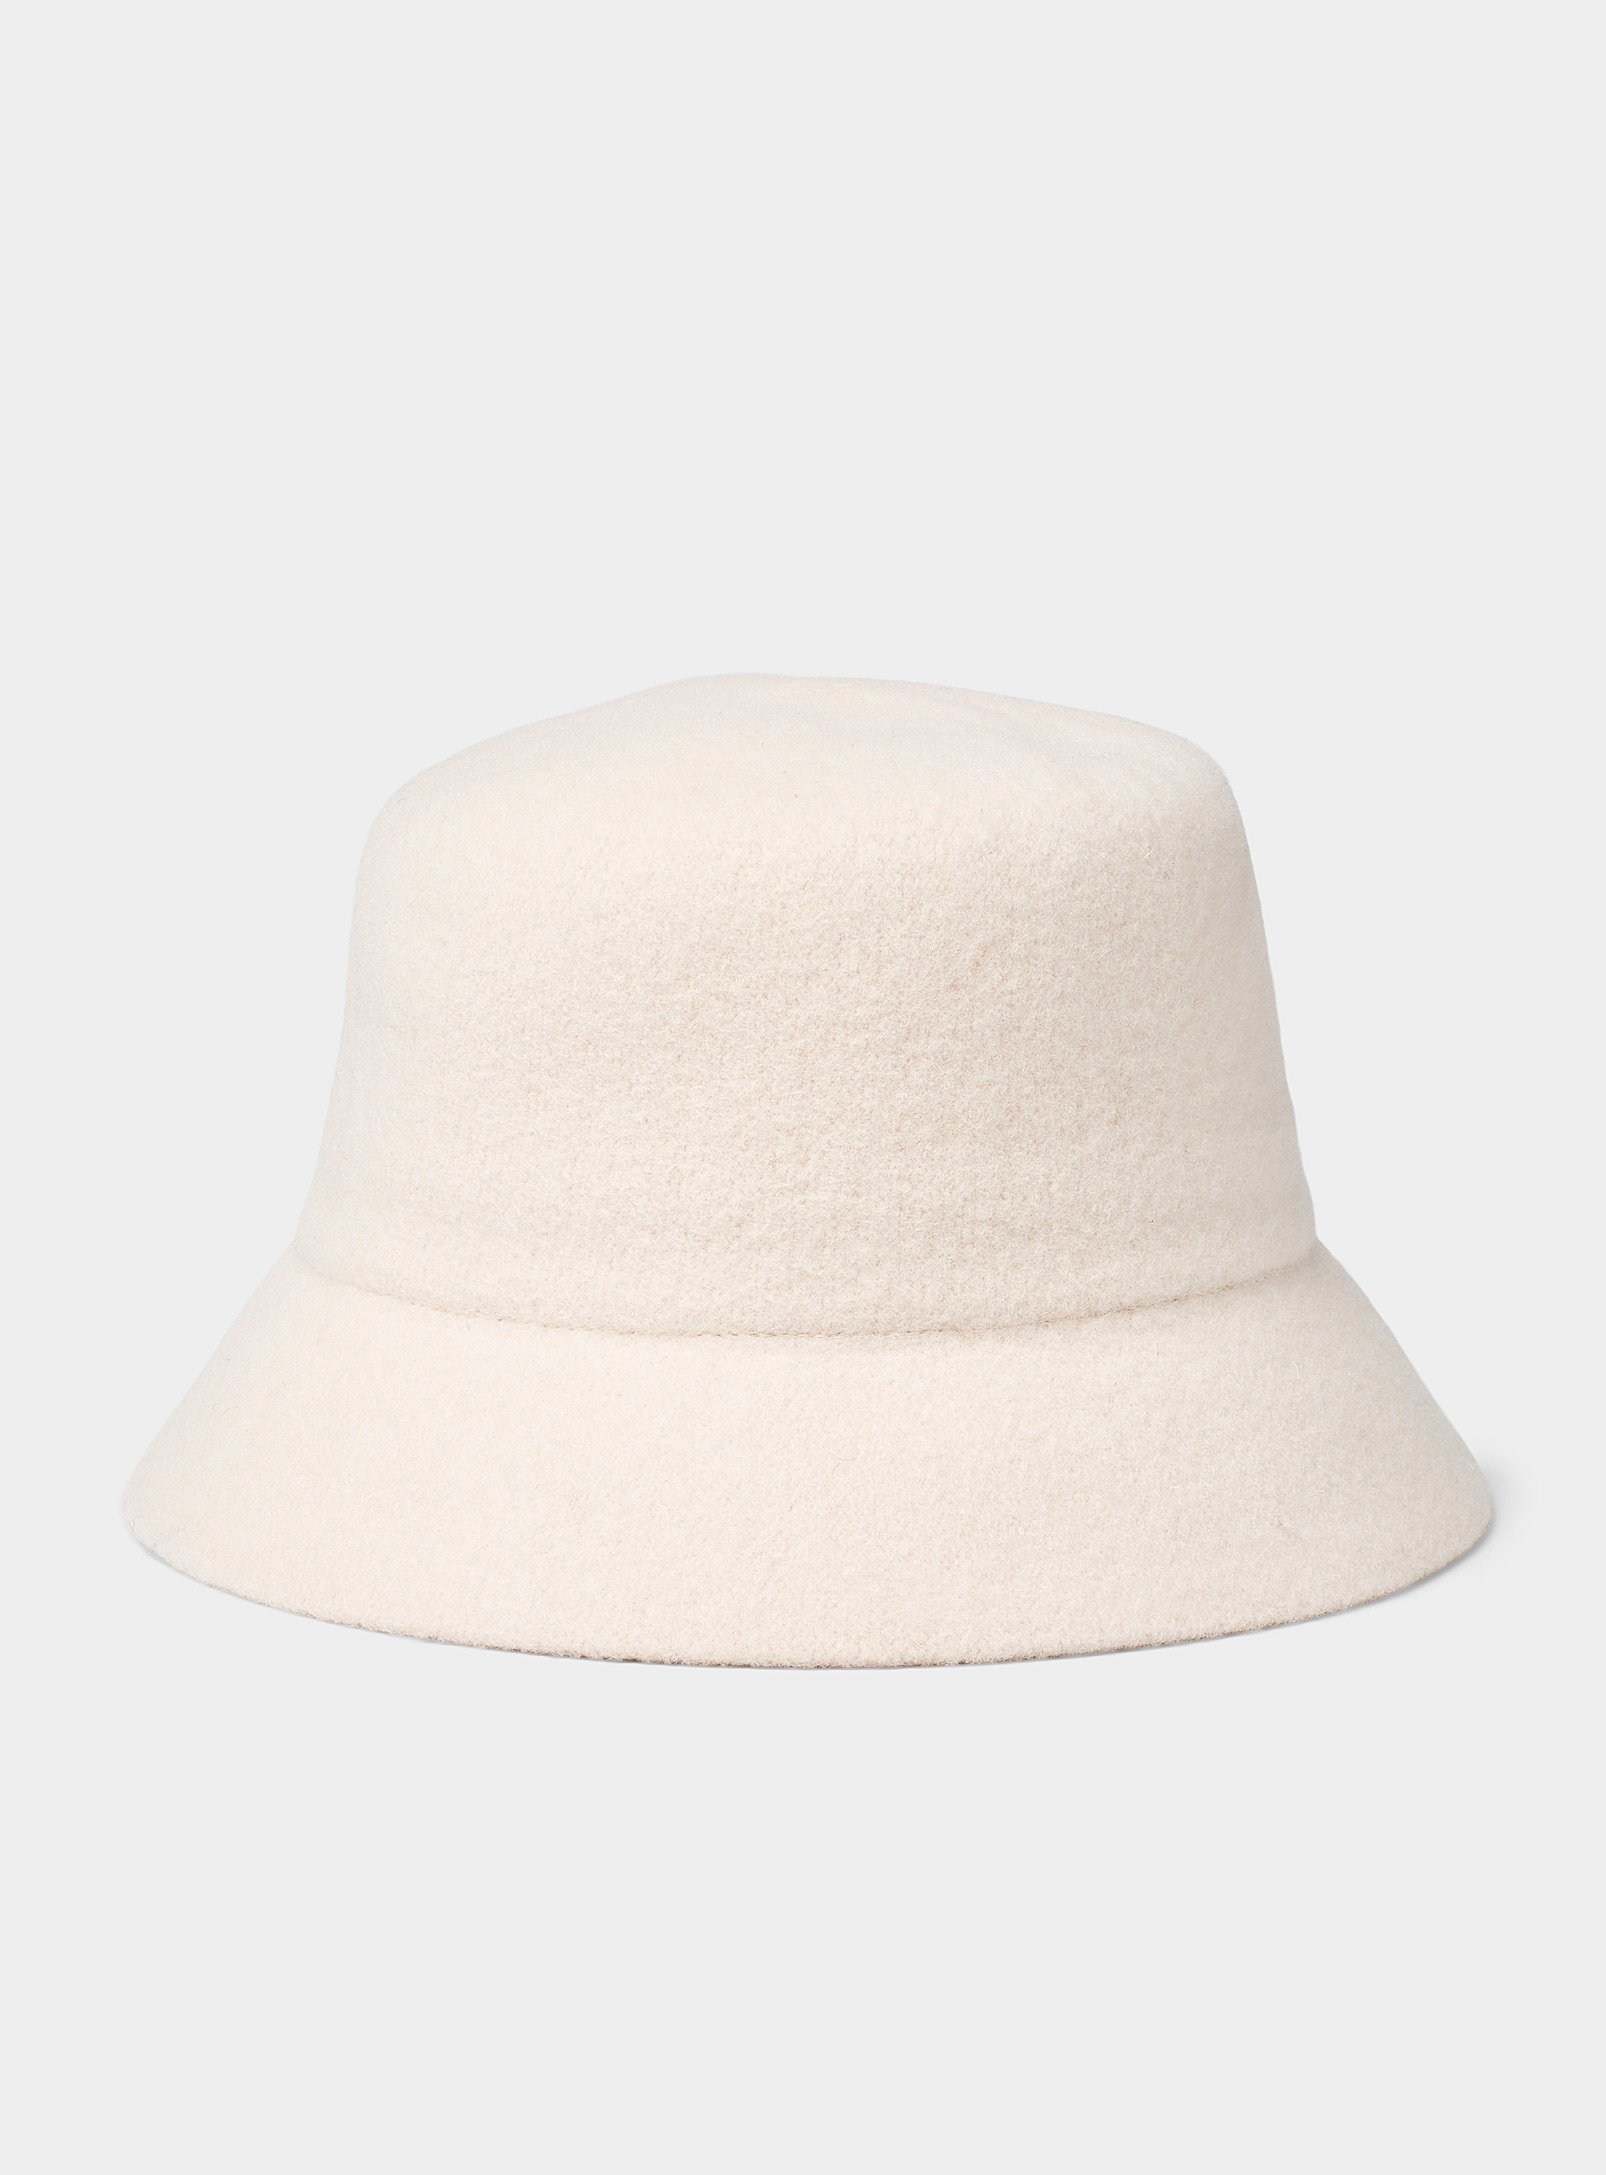 Canadian Hat Felt Bucket Hat In Ivory White